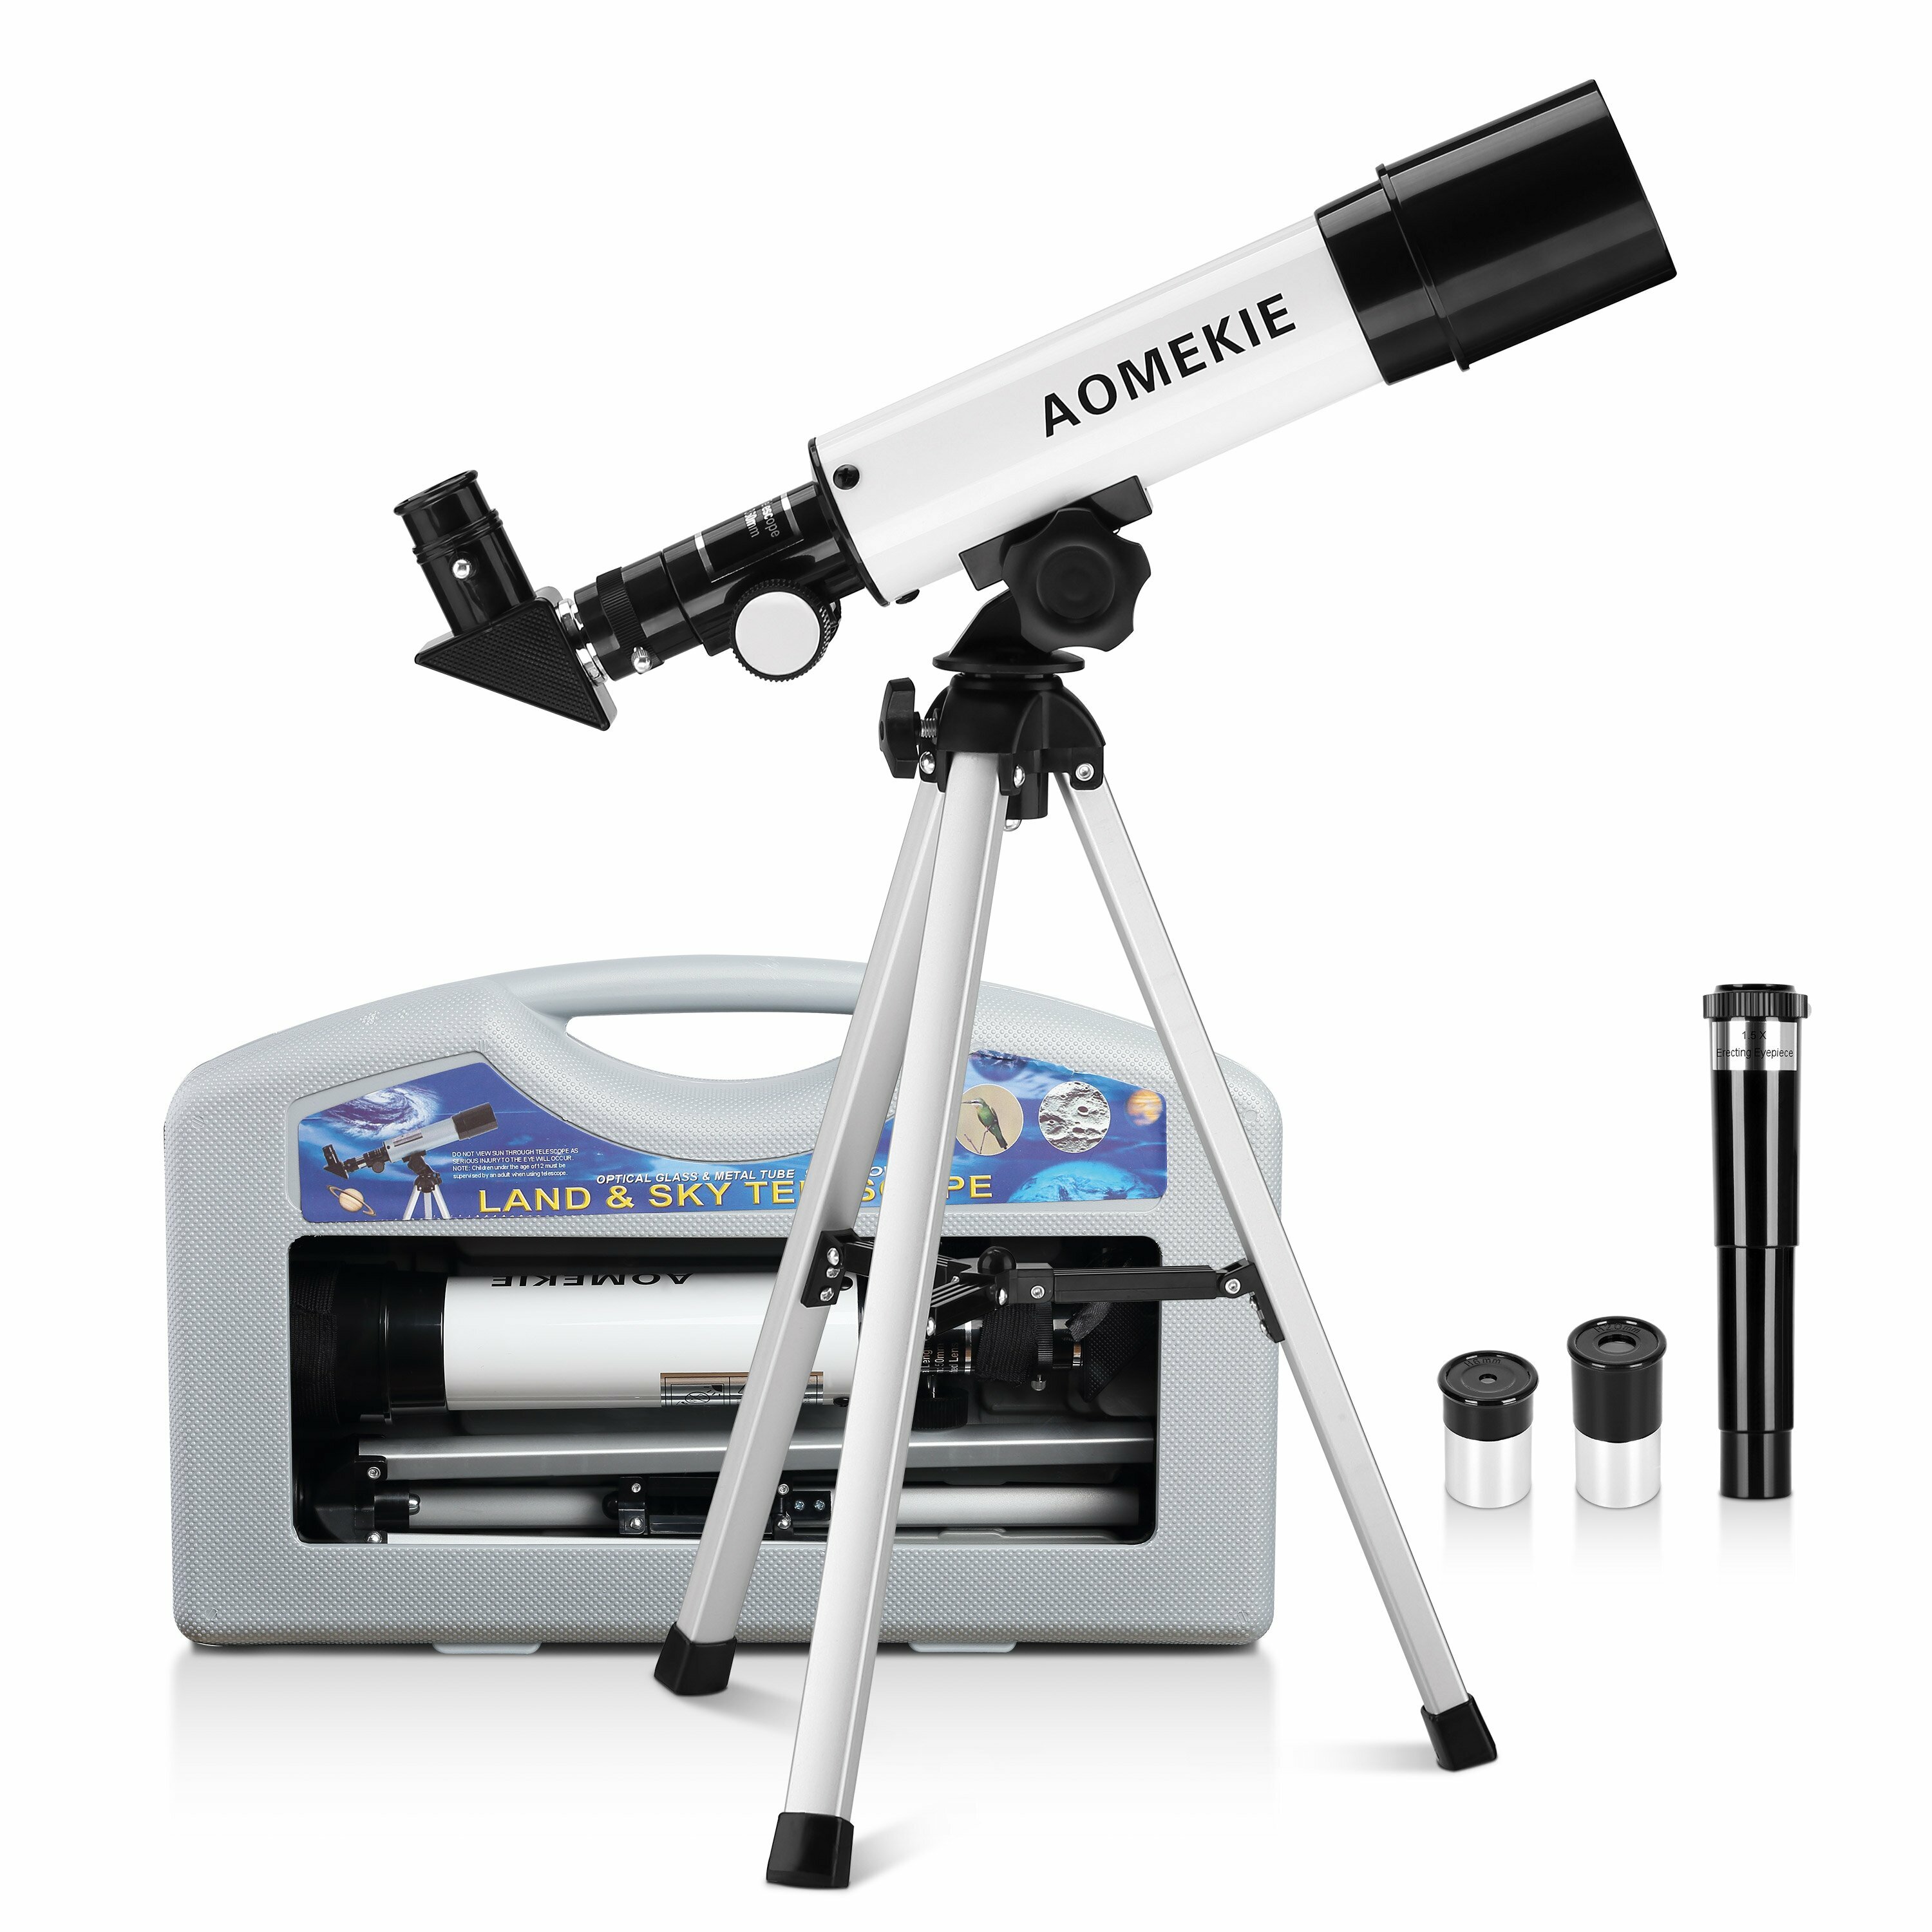 Telescopio refractor AOMEKIE para niños de 50/360 mm para principiantes en astronomía con estuche de transporte, trípode, ocular erecto